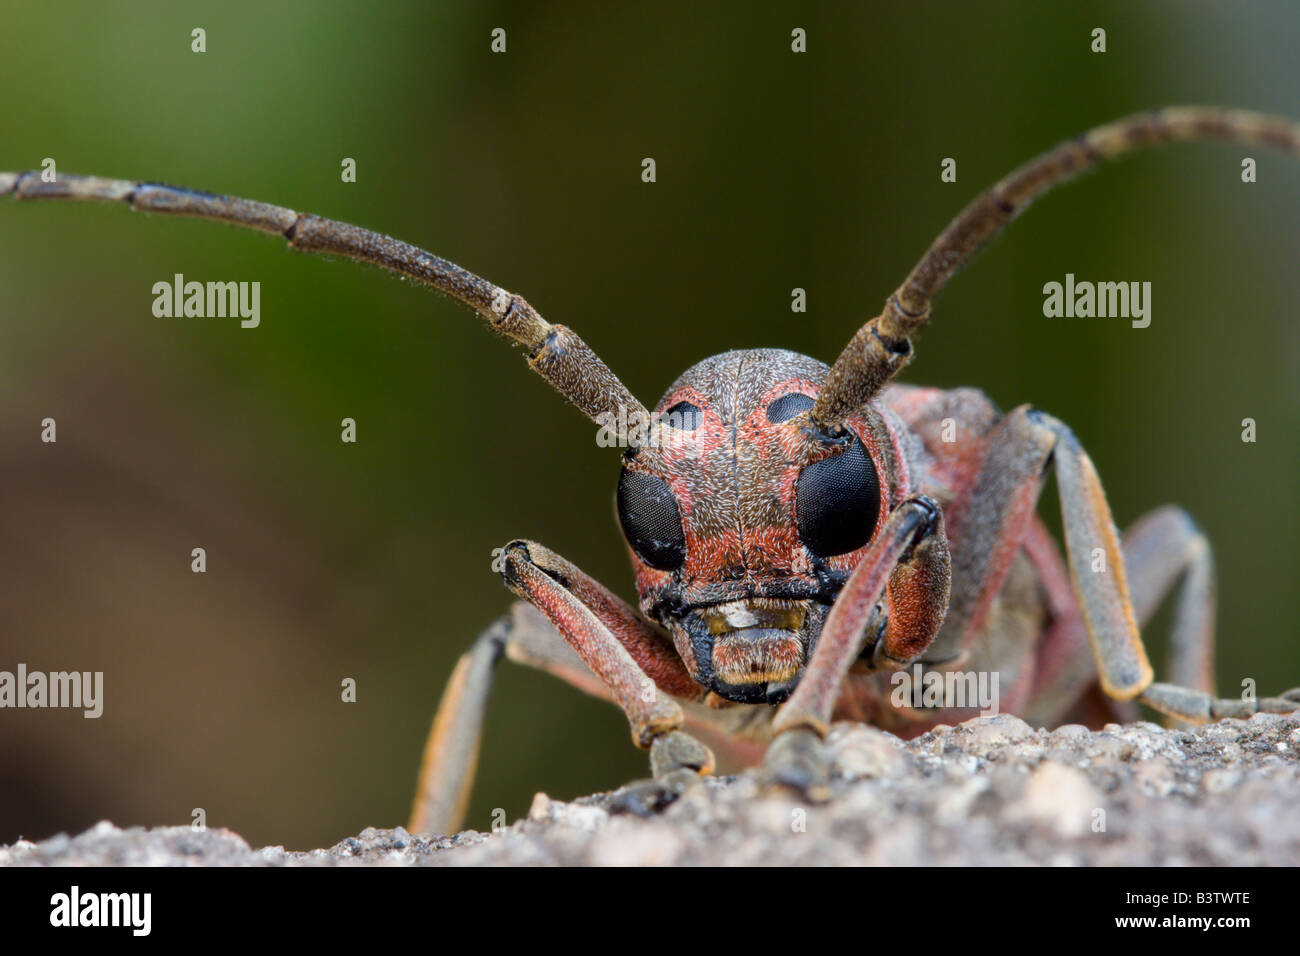 insect bug critter Uganda Stock Photo